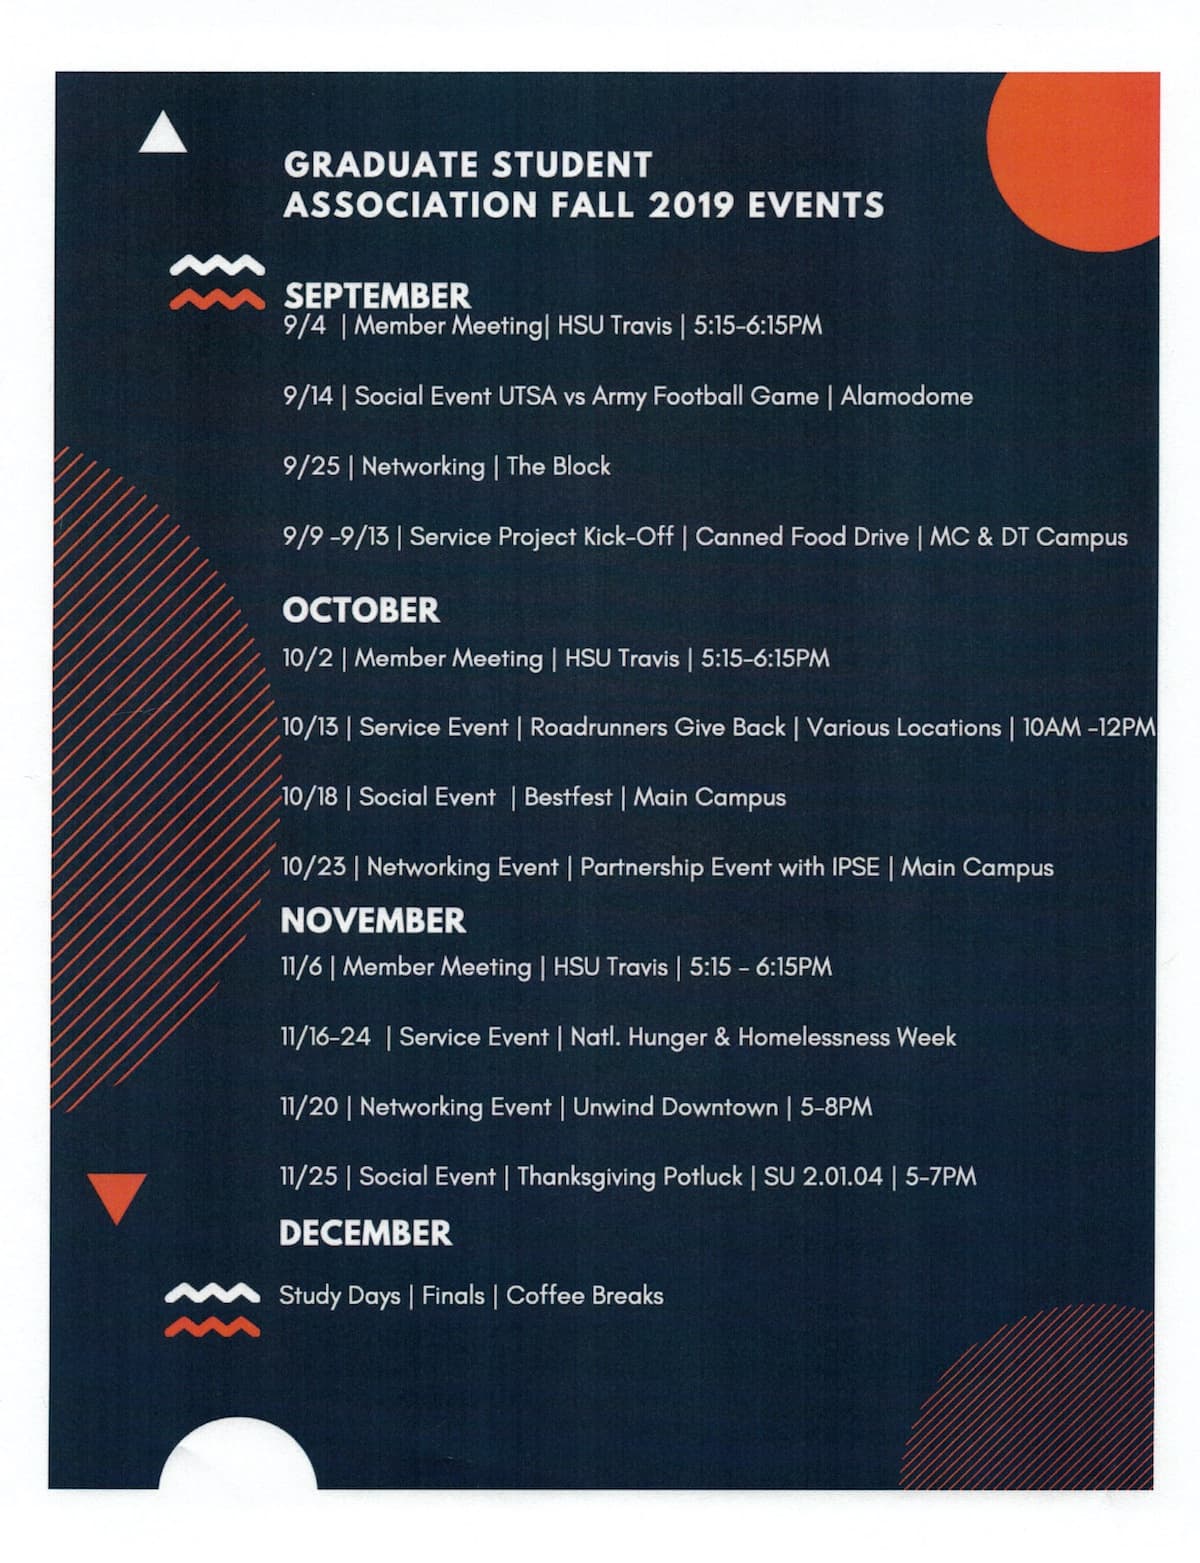 Graduate Student Association Fall 2019 Events Schedule